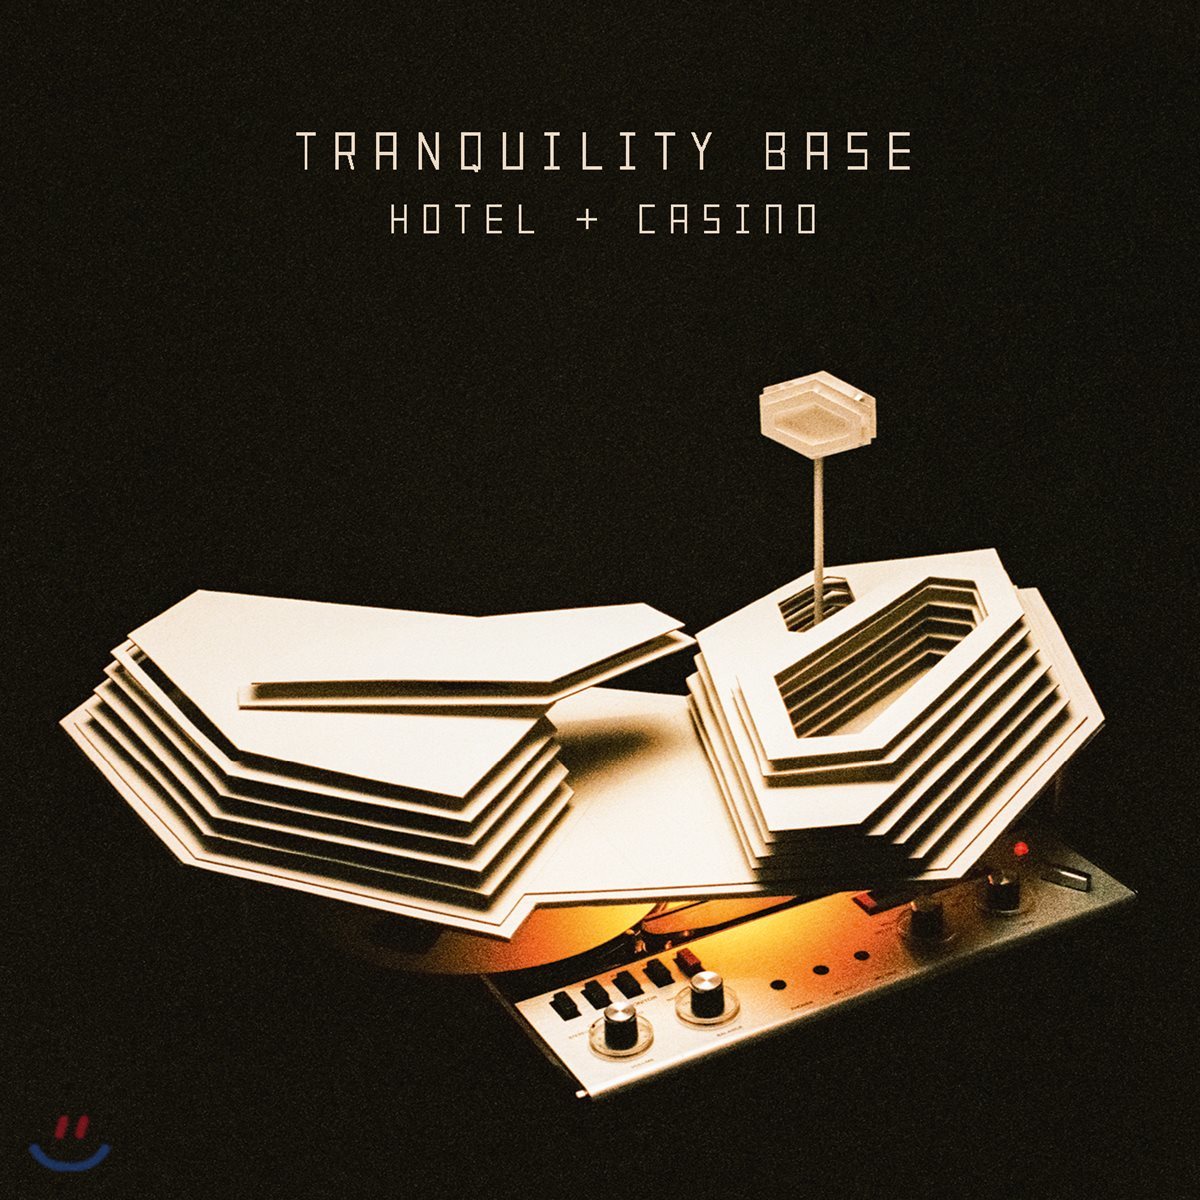 Arctic Monkeys - Tranquility Base Hotel & Casino 악틱 몽키즈 정규 6집 